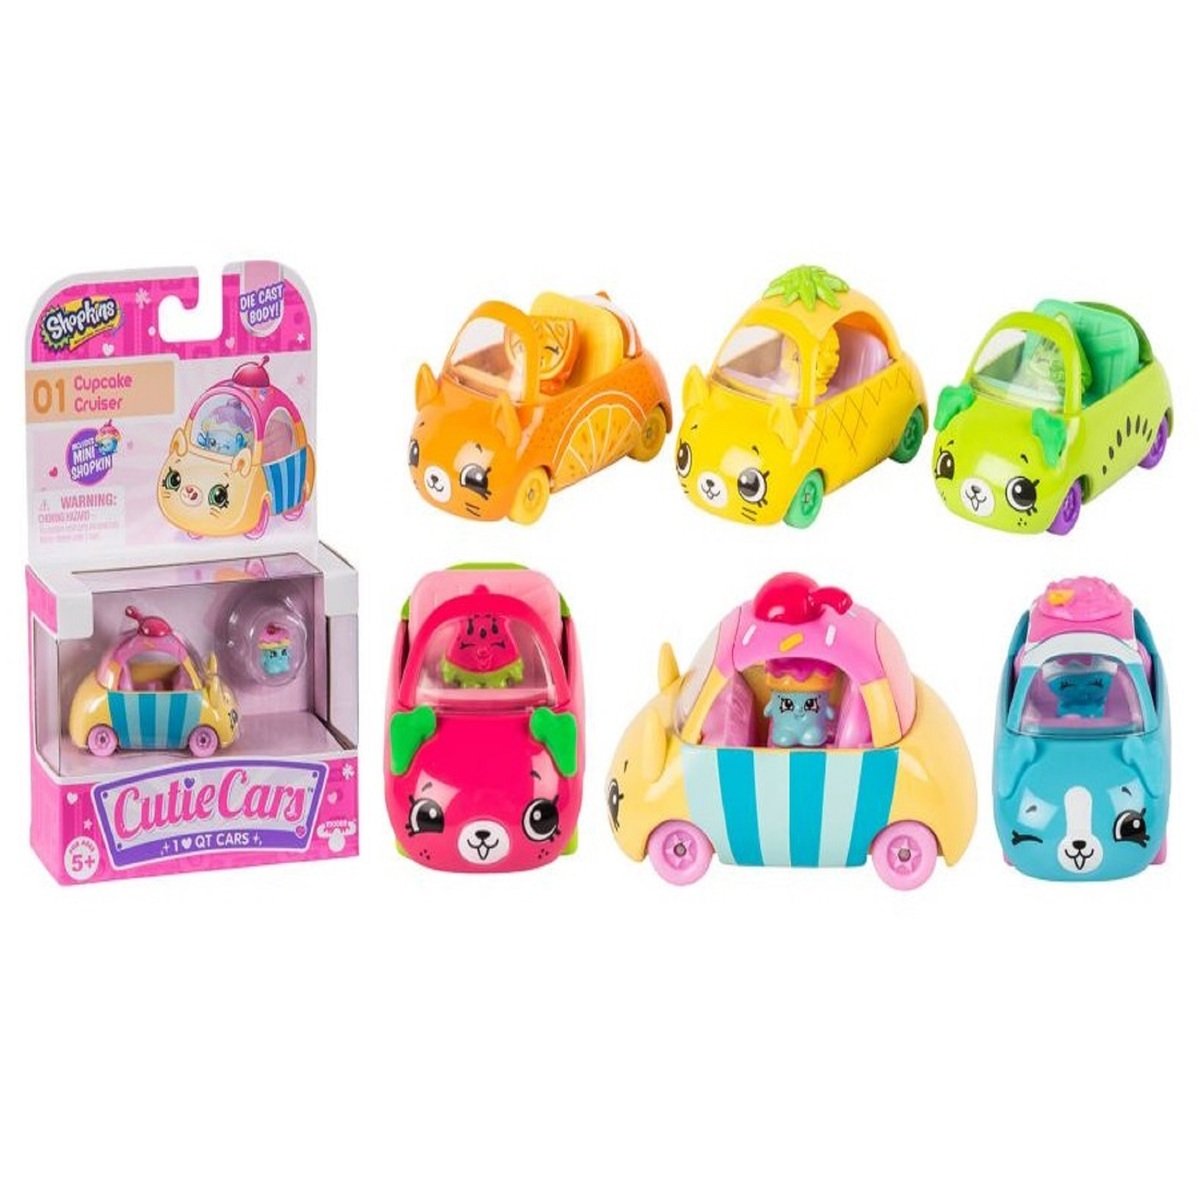 Cutie Cars Shopkins Pack Assorted 1Pc 57100